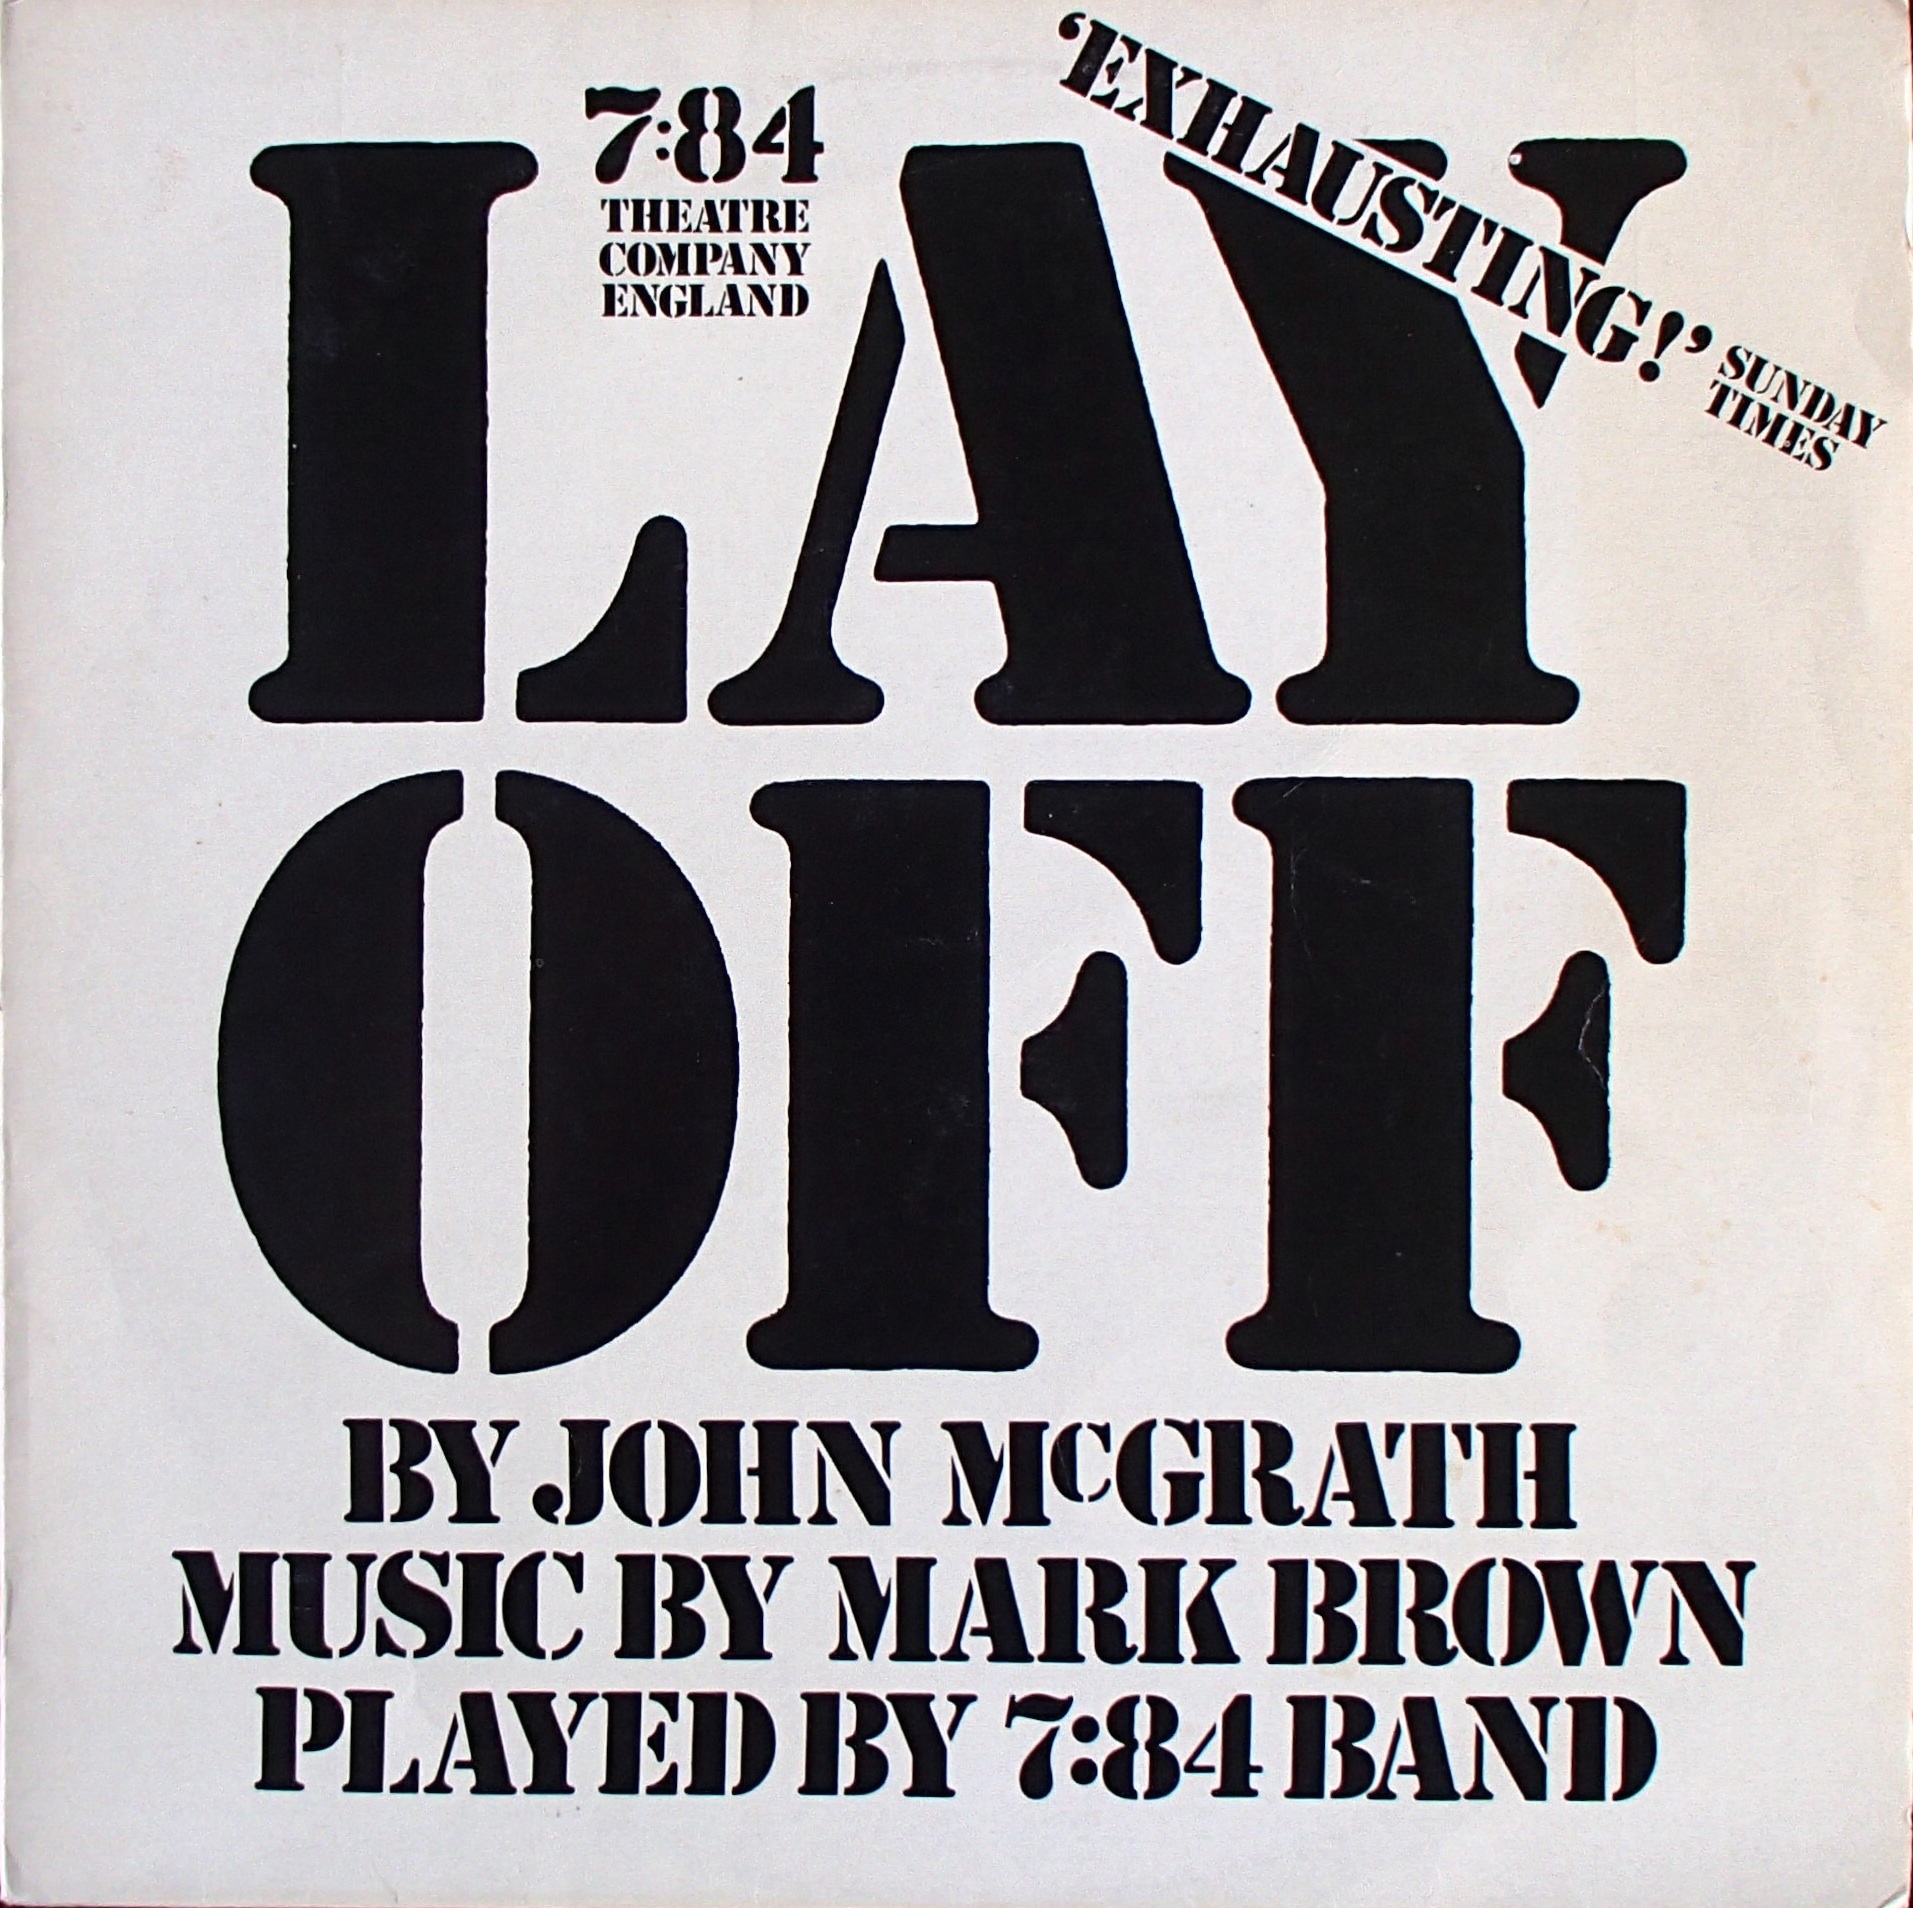 7:84 Theatre Company England ‎– Lay Off 7:84 Theatre Company England ‎– Lay Off